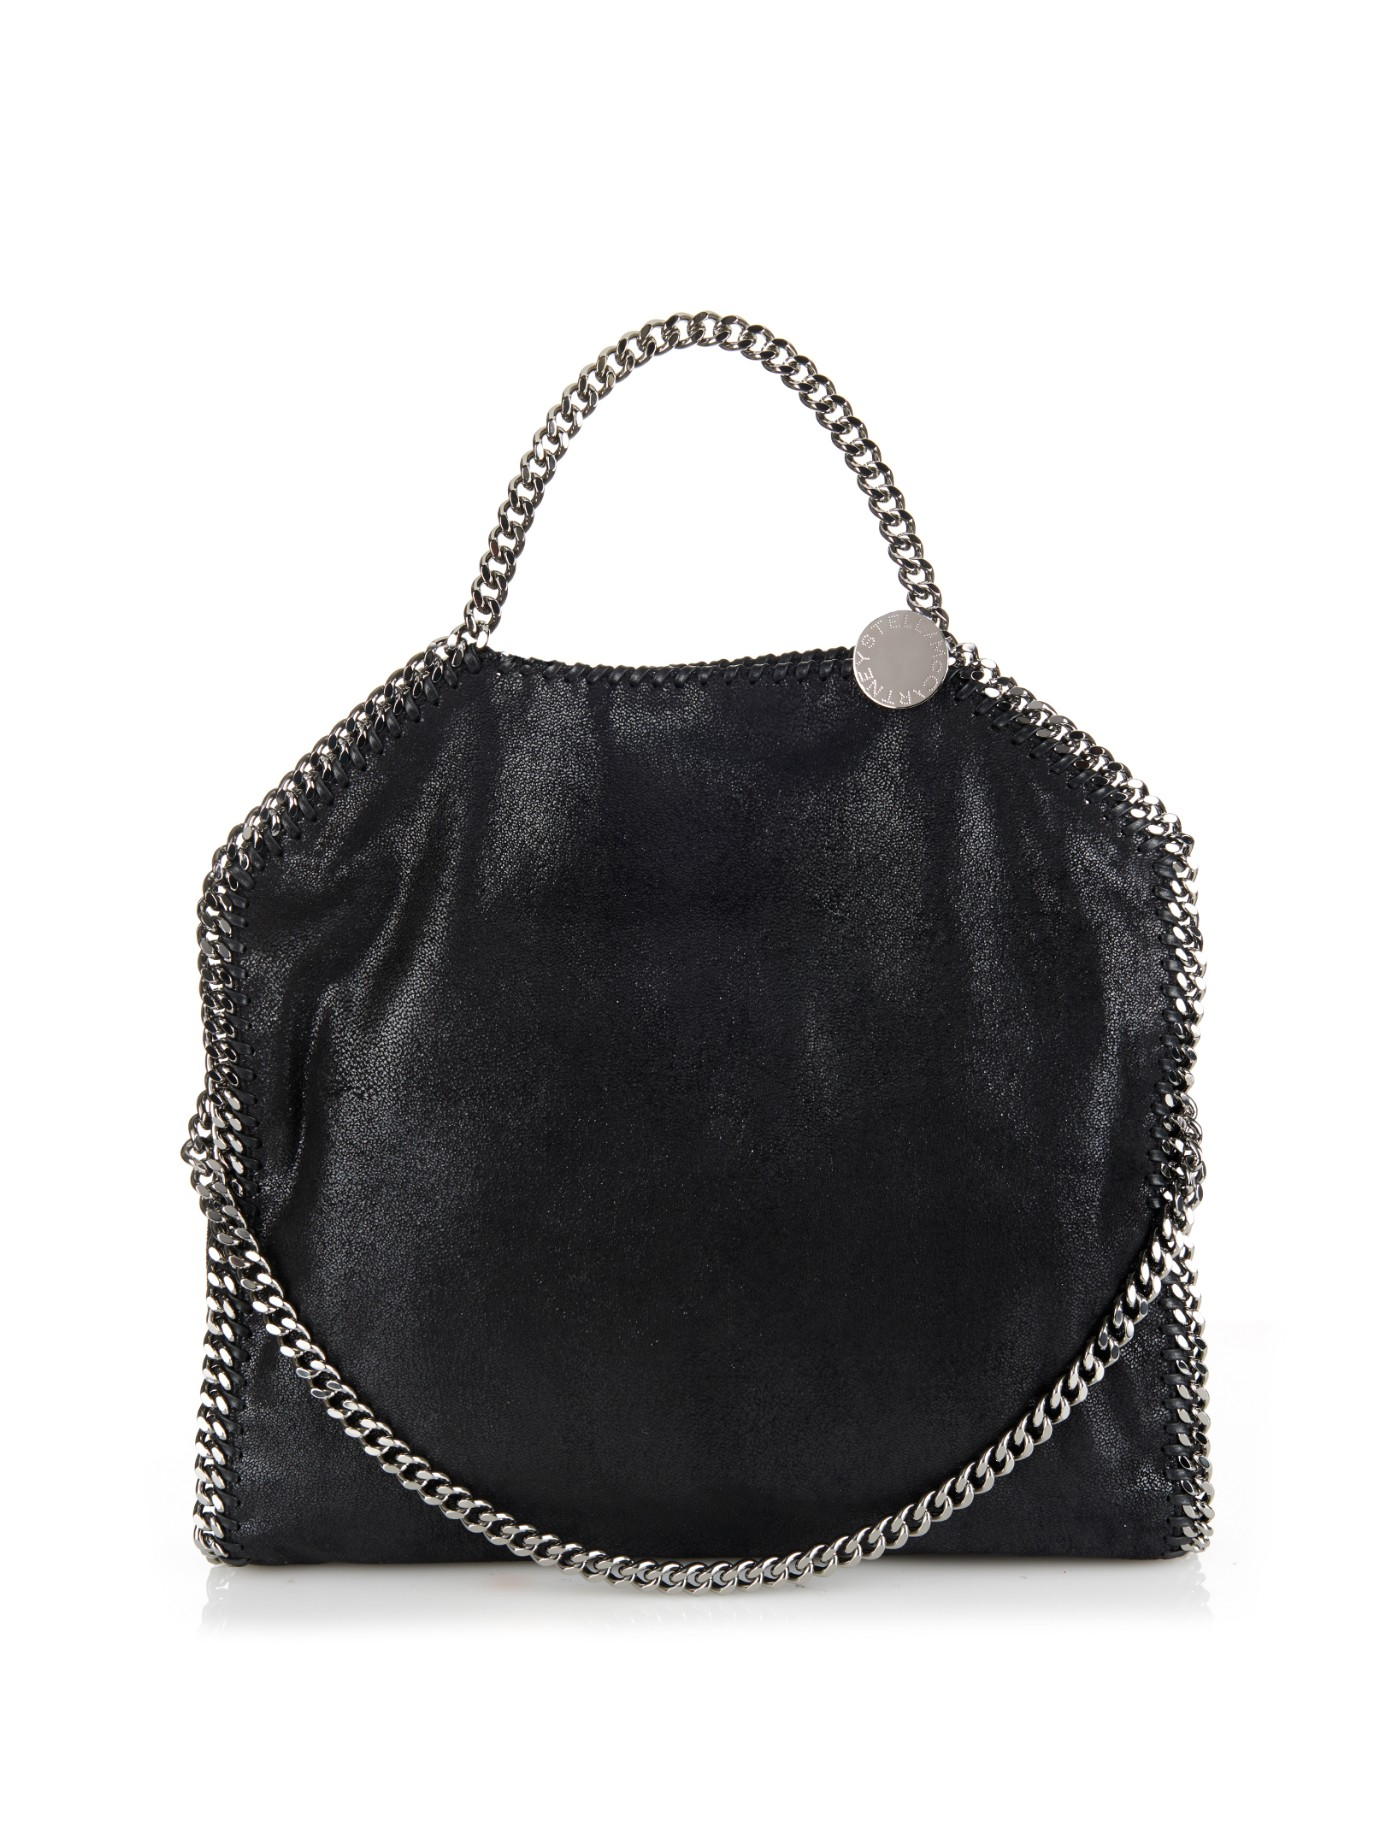 Stella mccartney Falabella Small Faux-suede Shoulder Bag in Black | Lyst